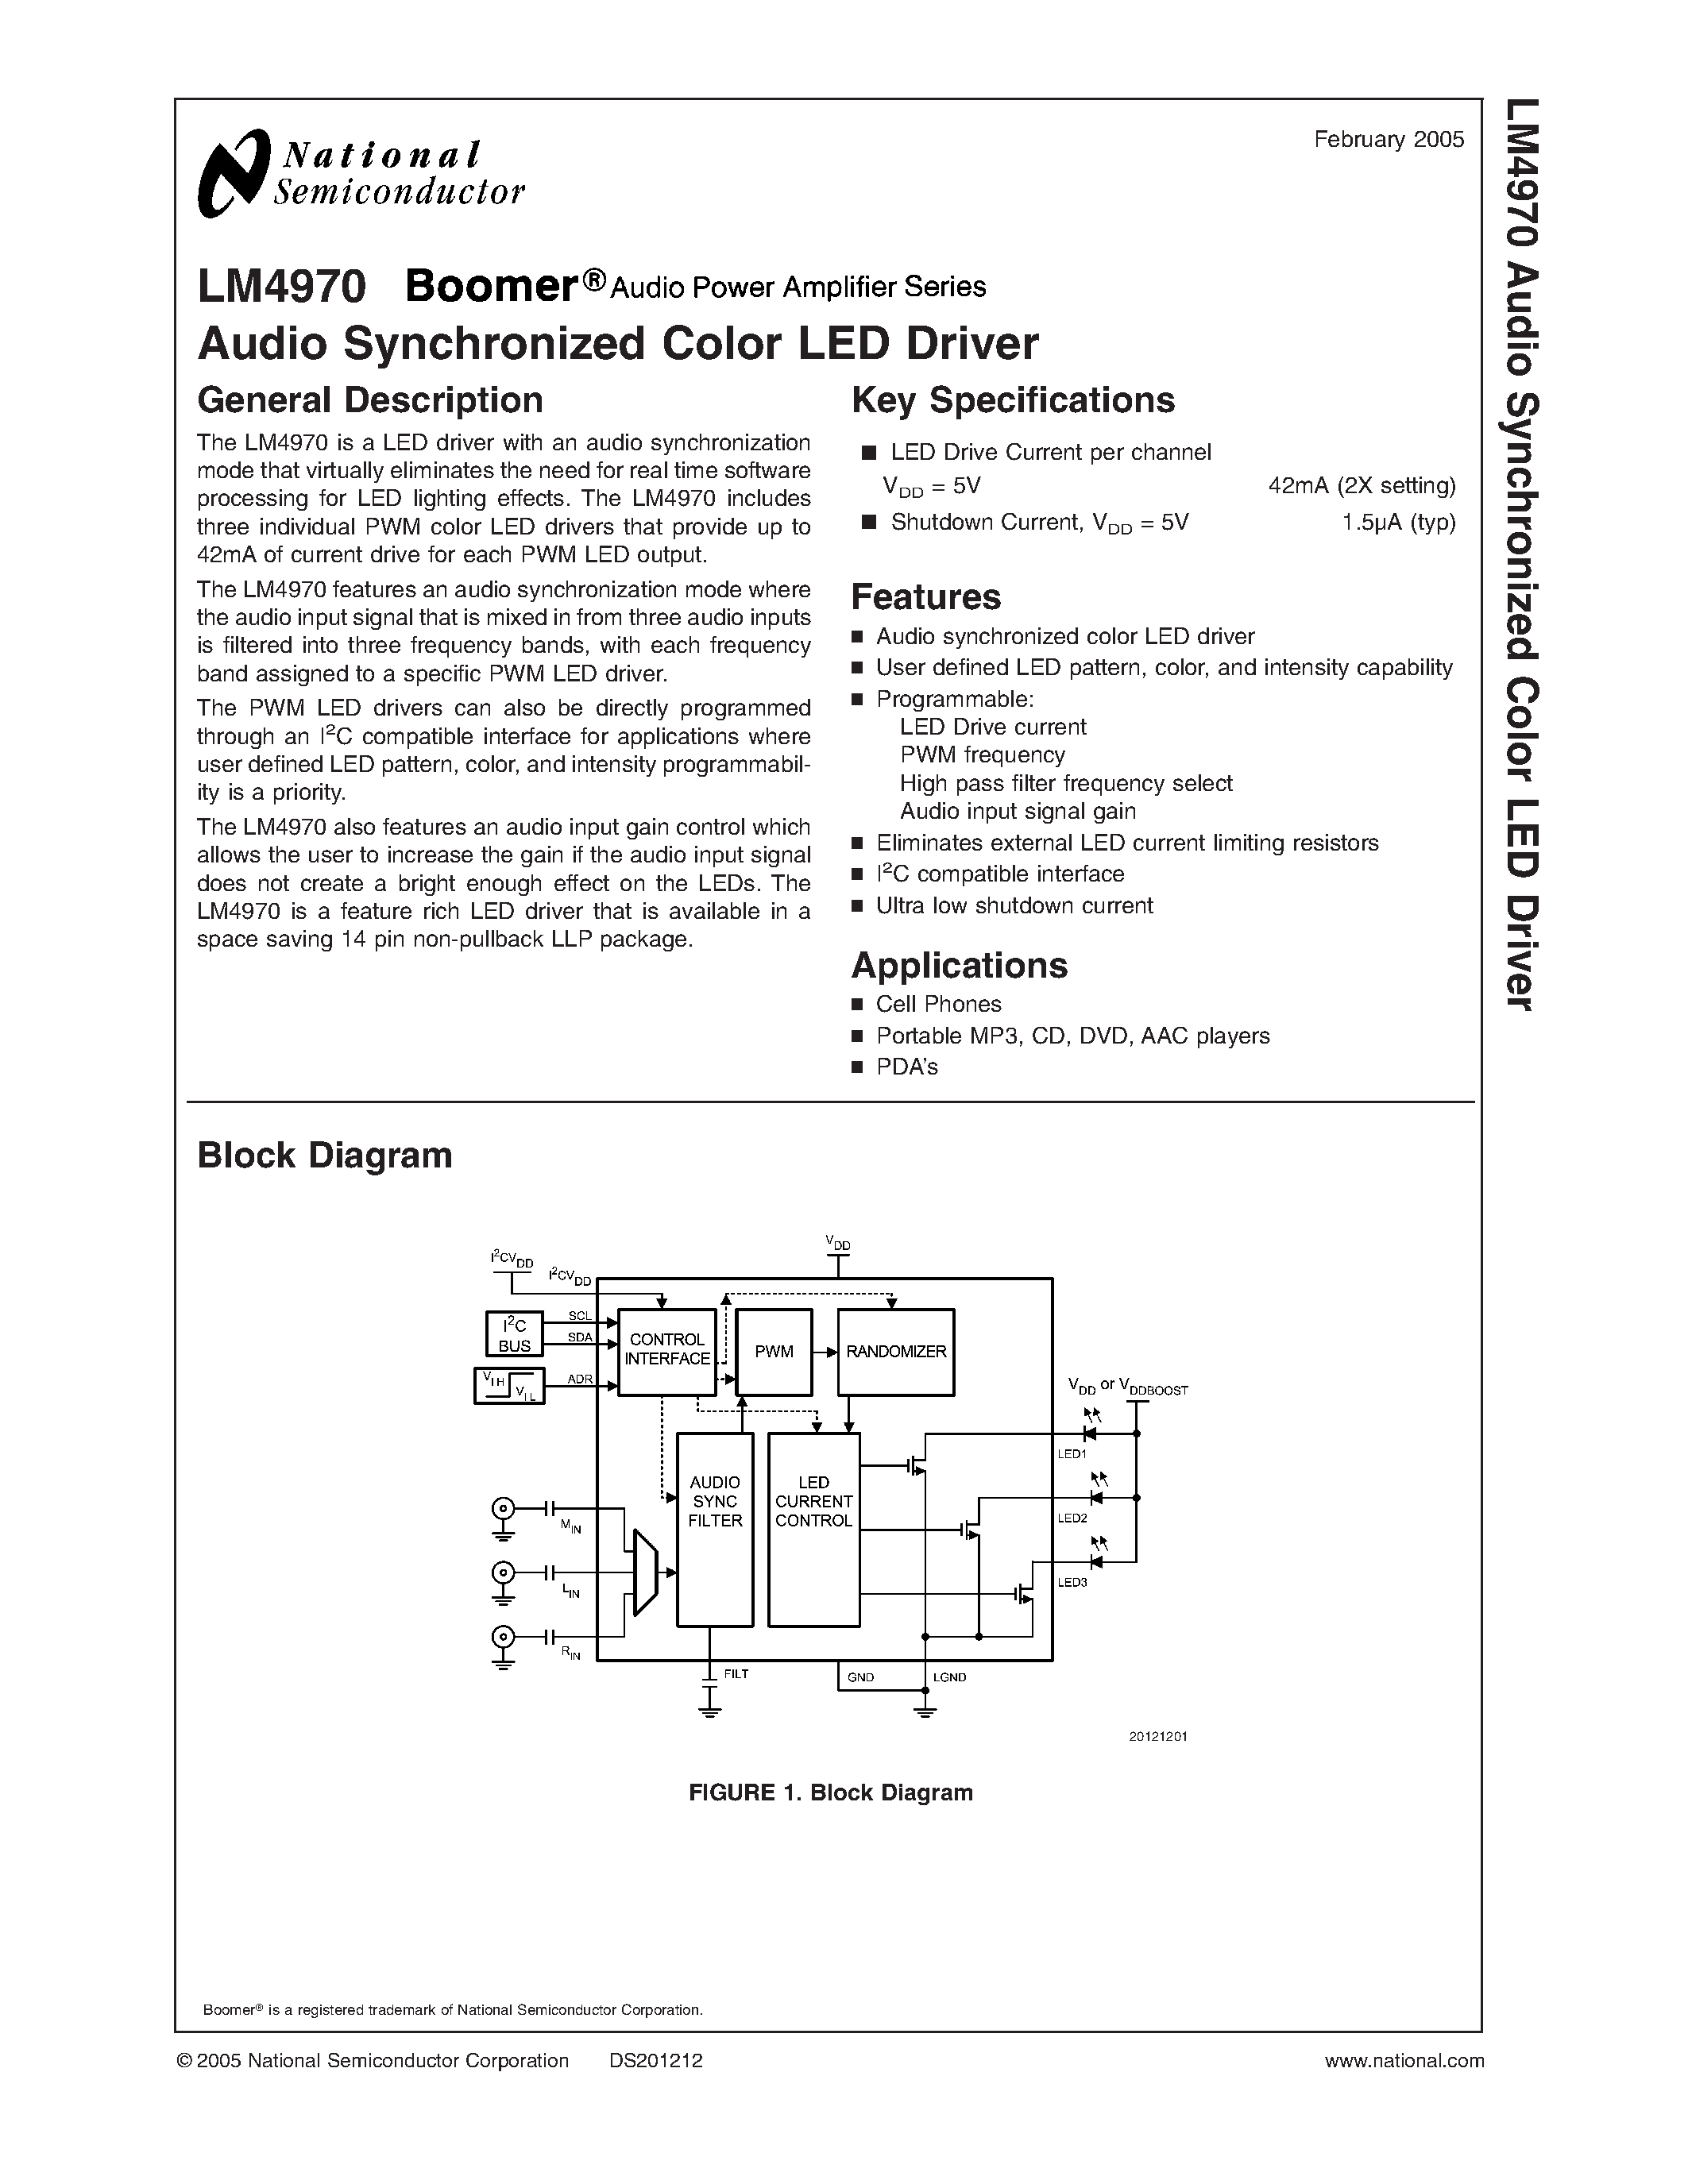 Даташит LM4970 - Audio Synchronized Color LED Driver страница 1